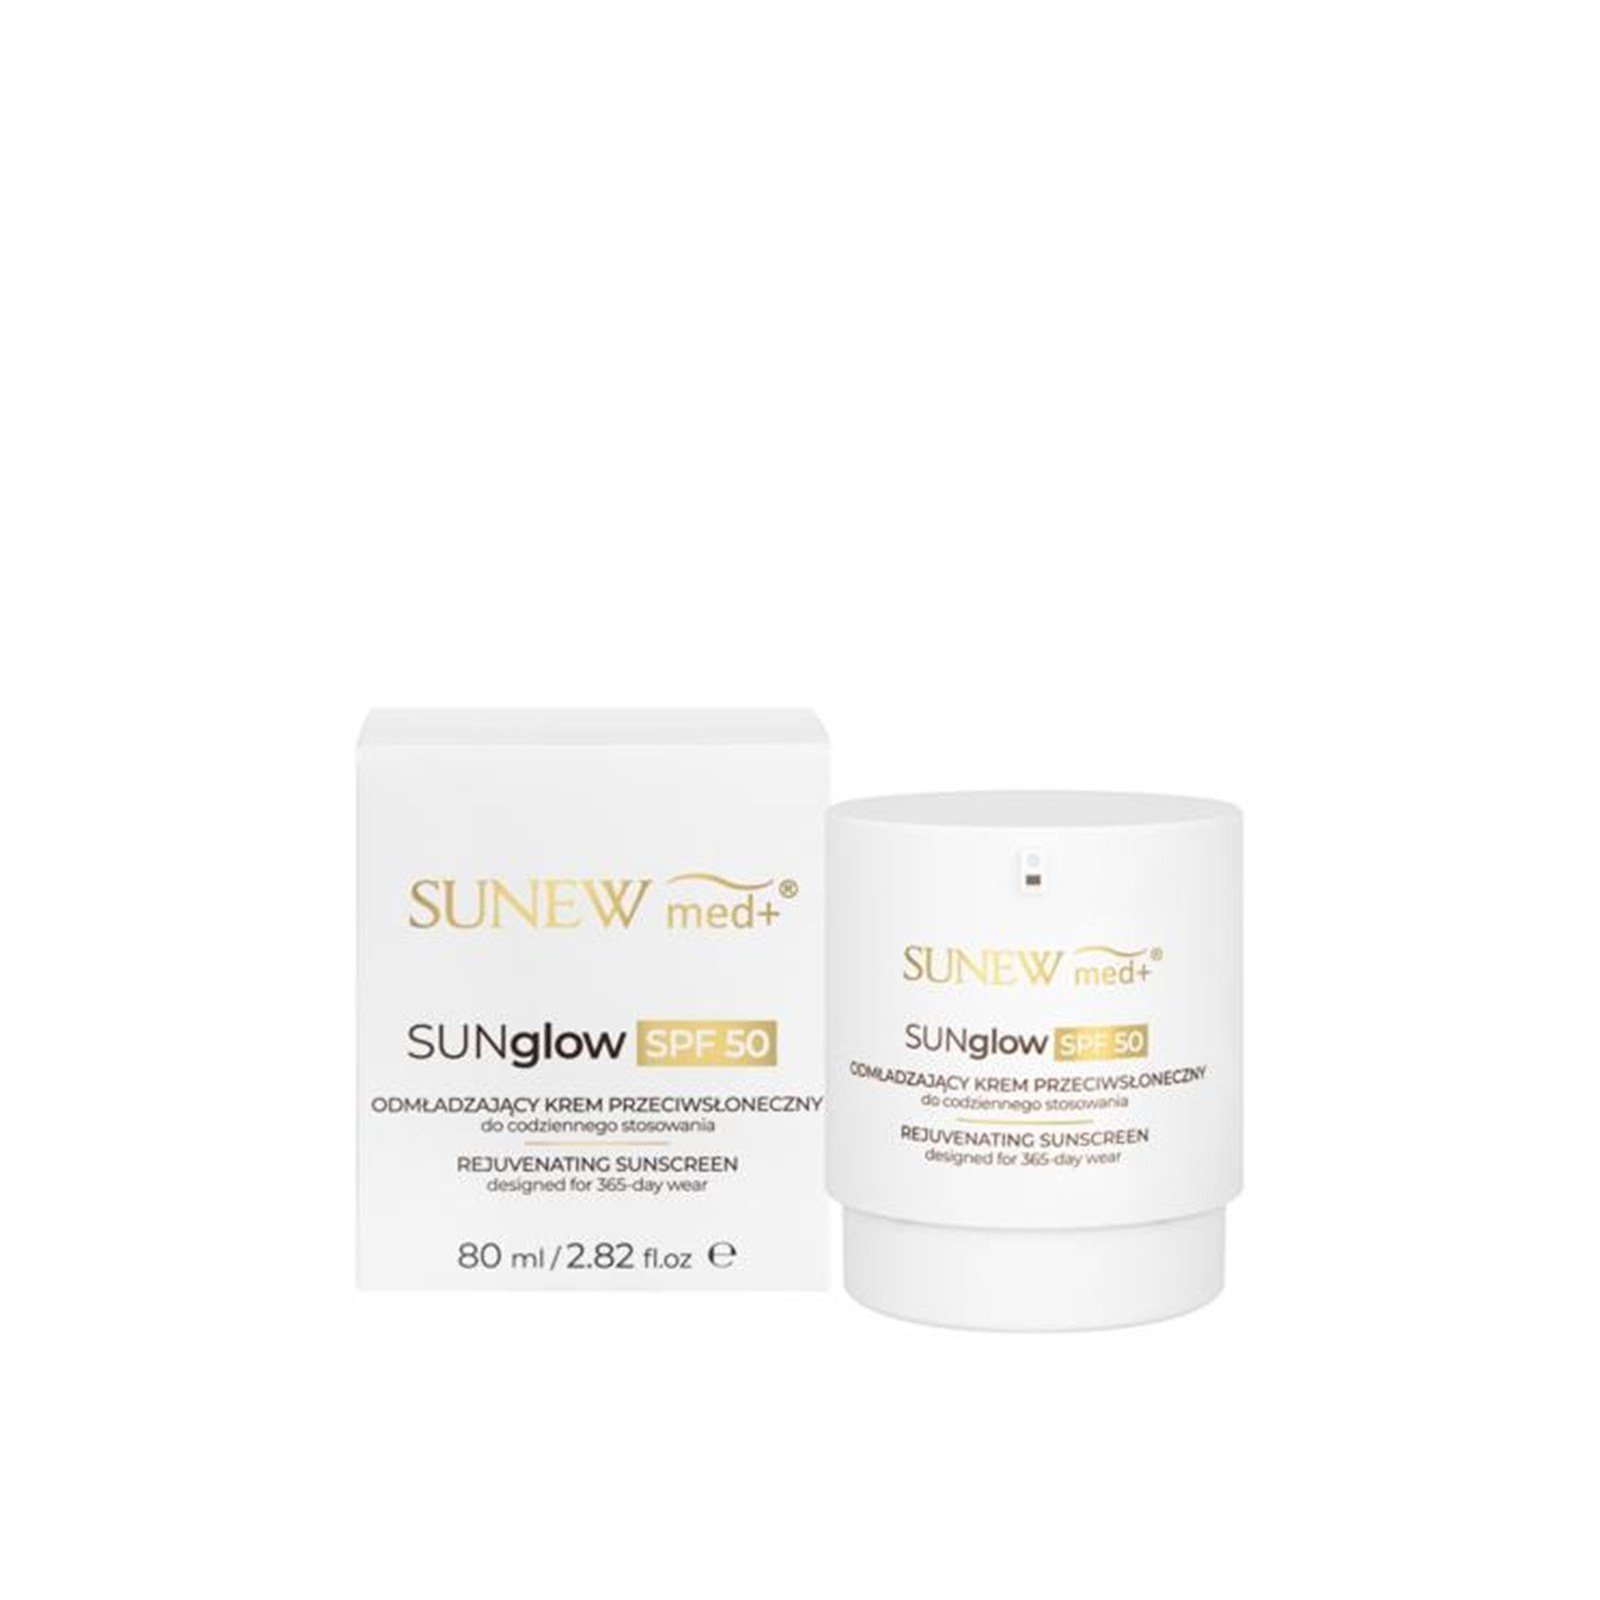 SunewMed+ SUNglow Rejuvenating Sunscreen SPF50 80ml (2.82 fl oz)